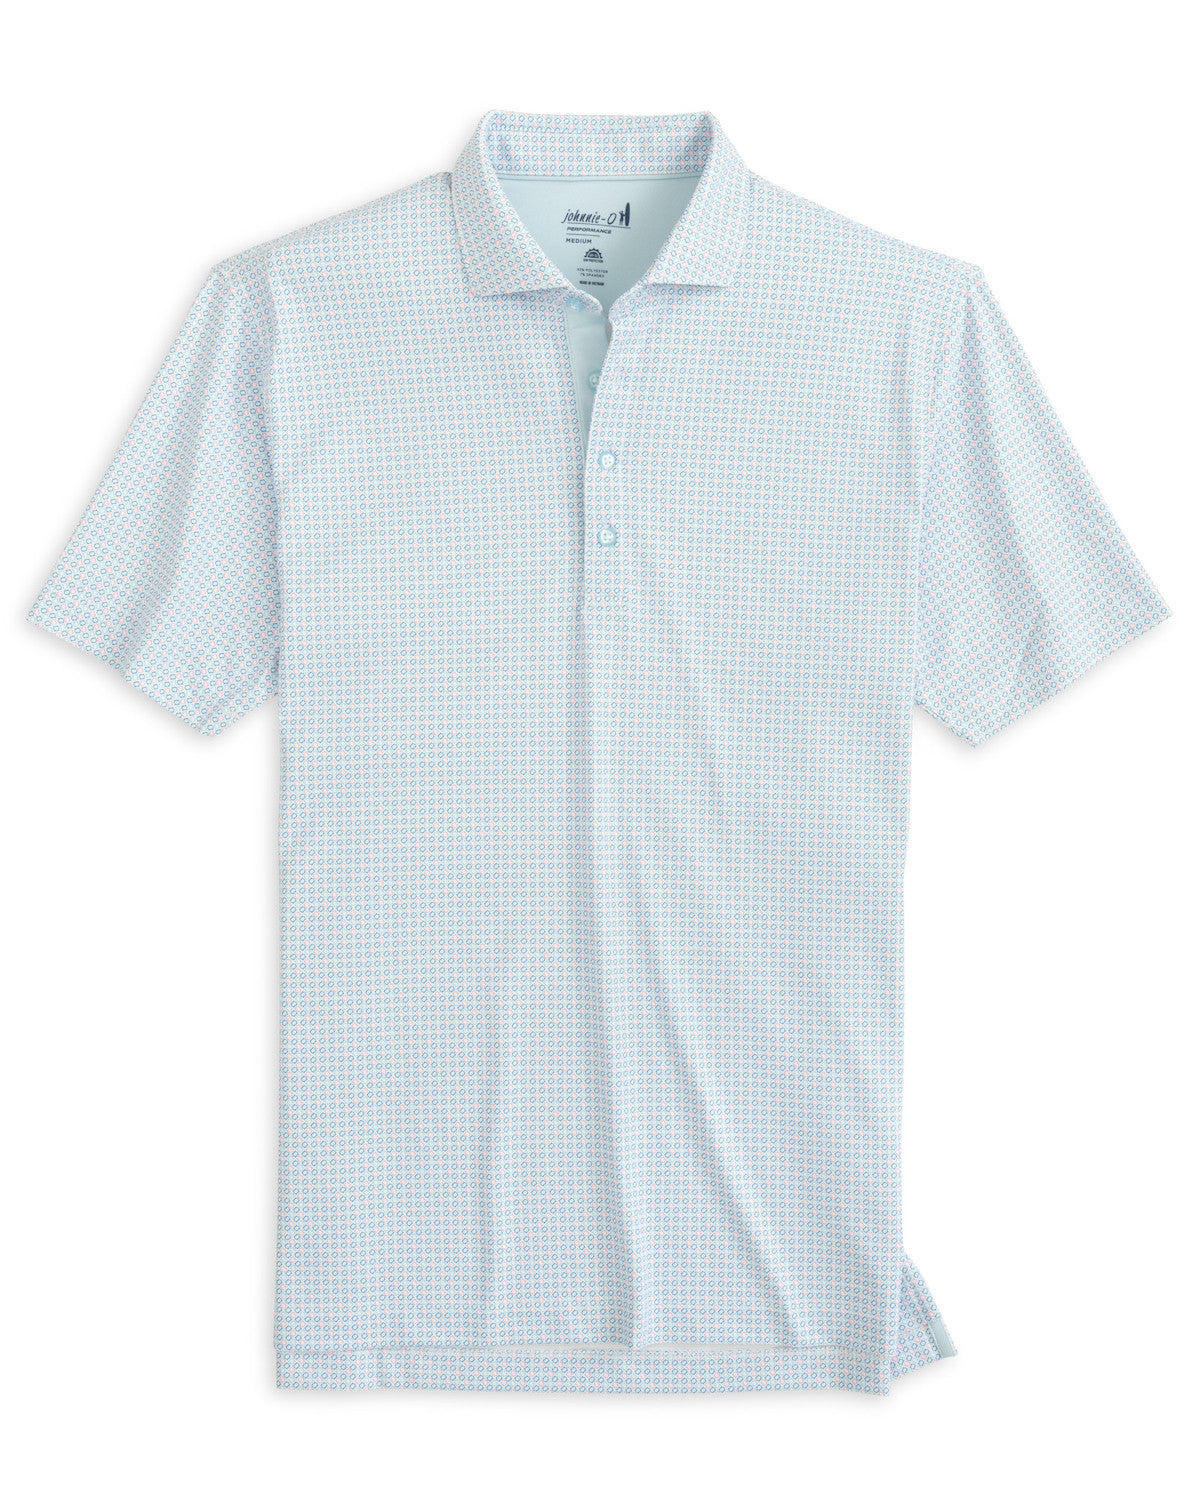 Johnnie-O Gilbert Short Sleeve Sport Shirt - White